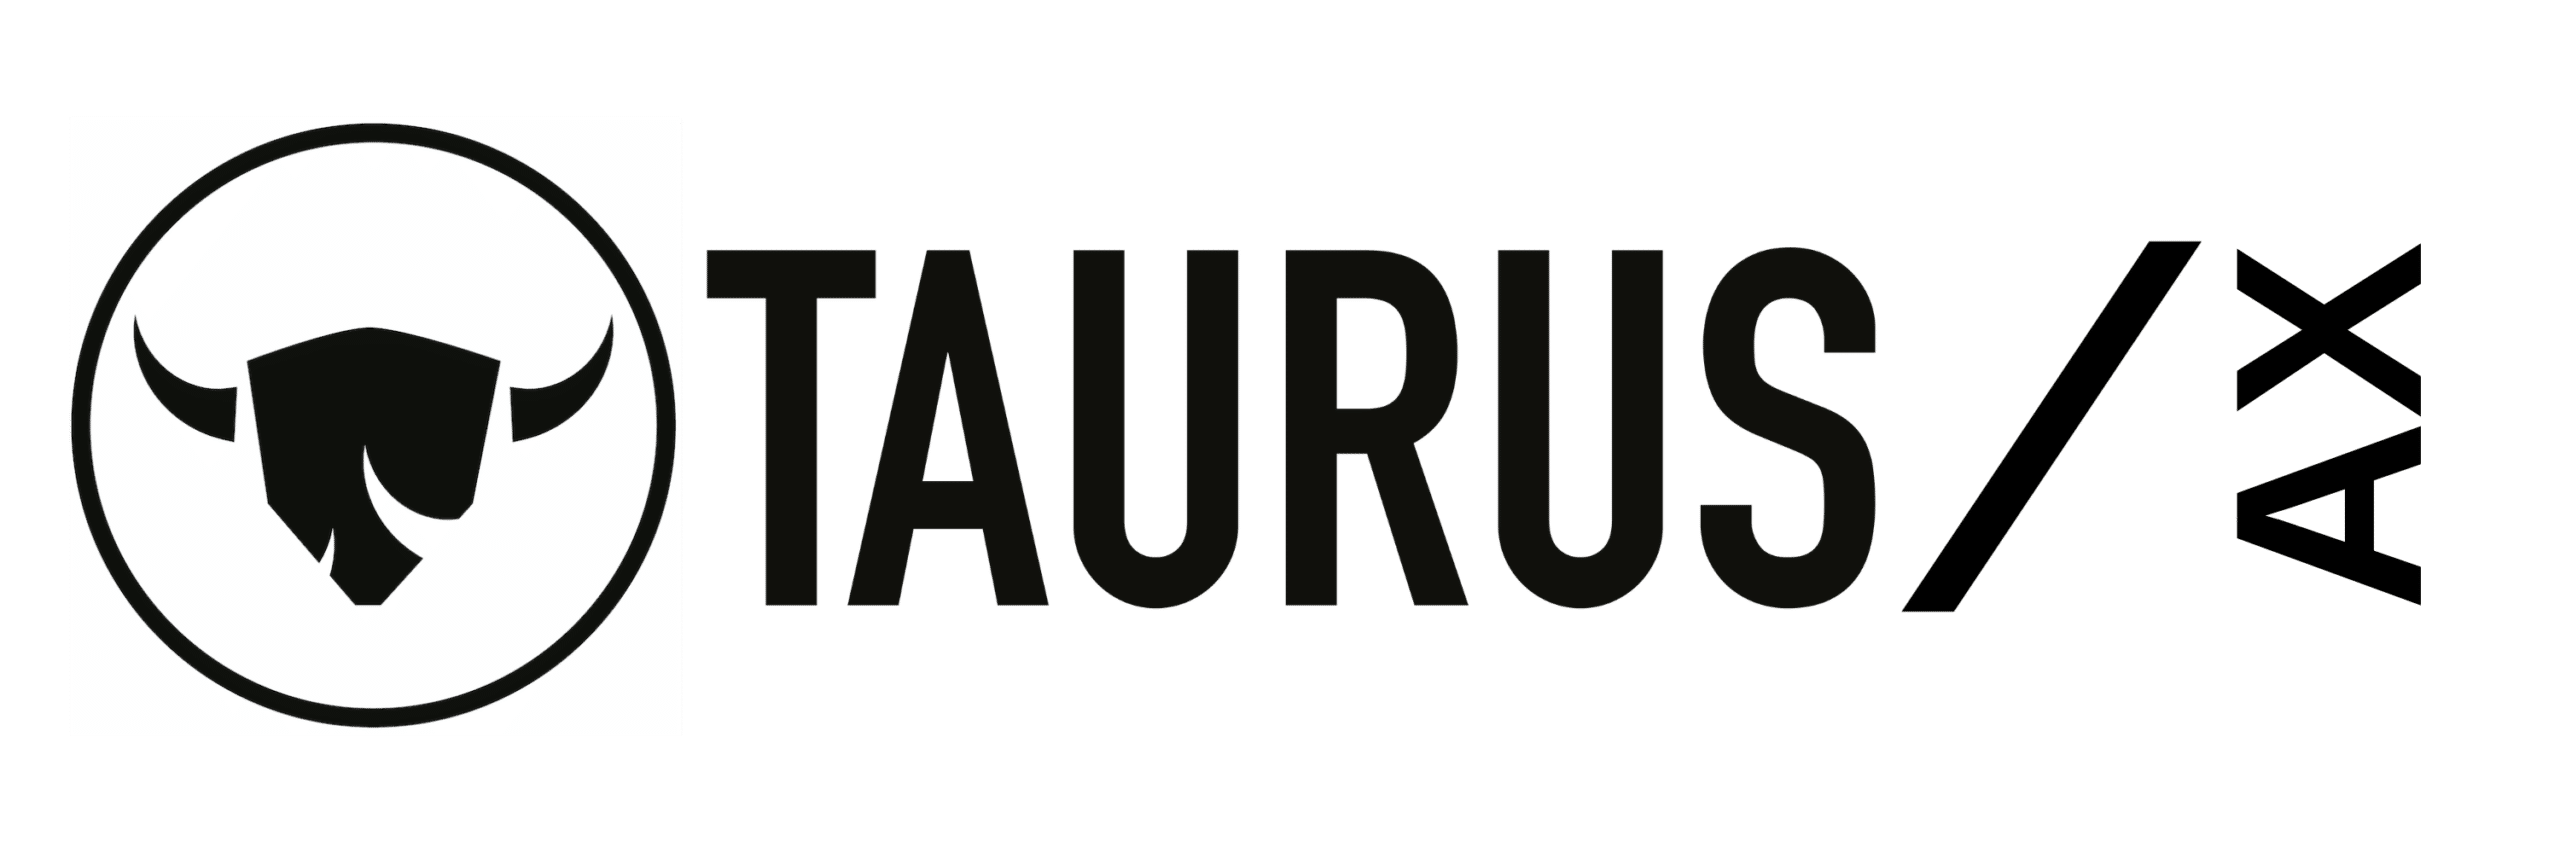 TAURUS-AX Zutrittssystem Logo